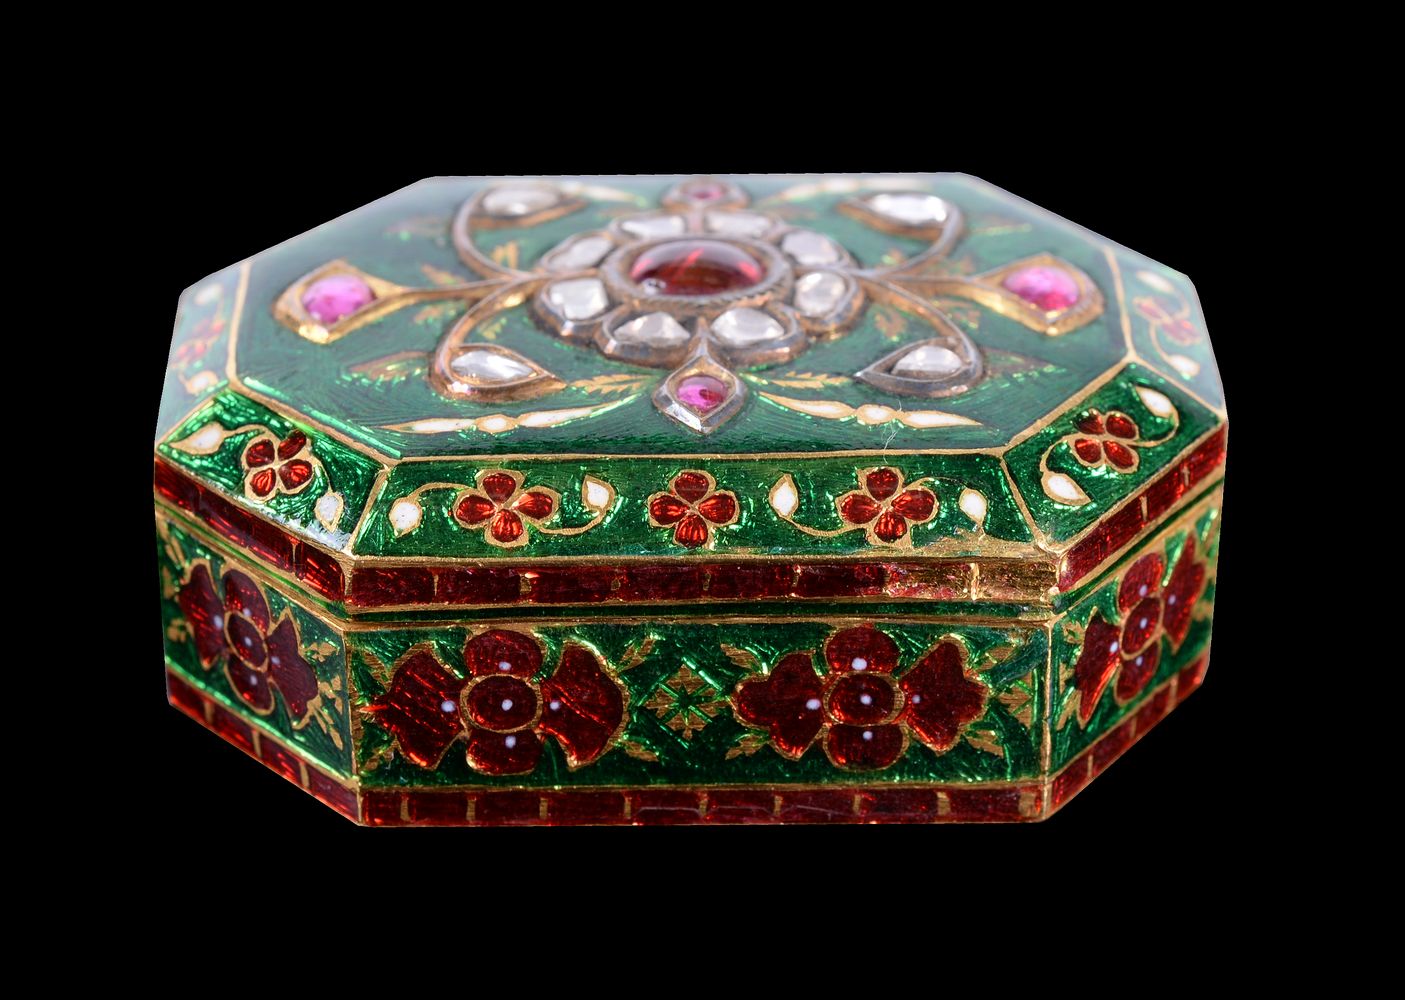 A Jaipur enamel and gold box